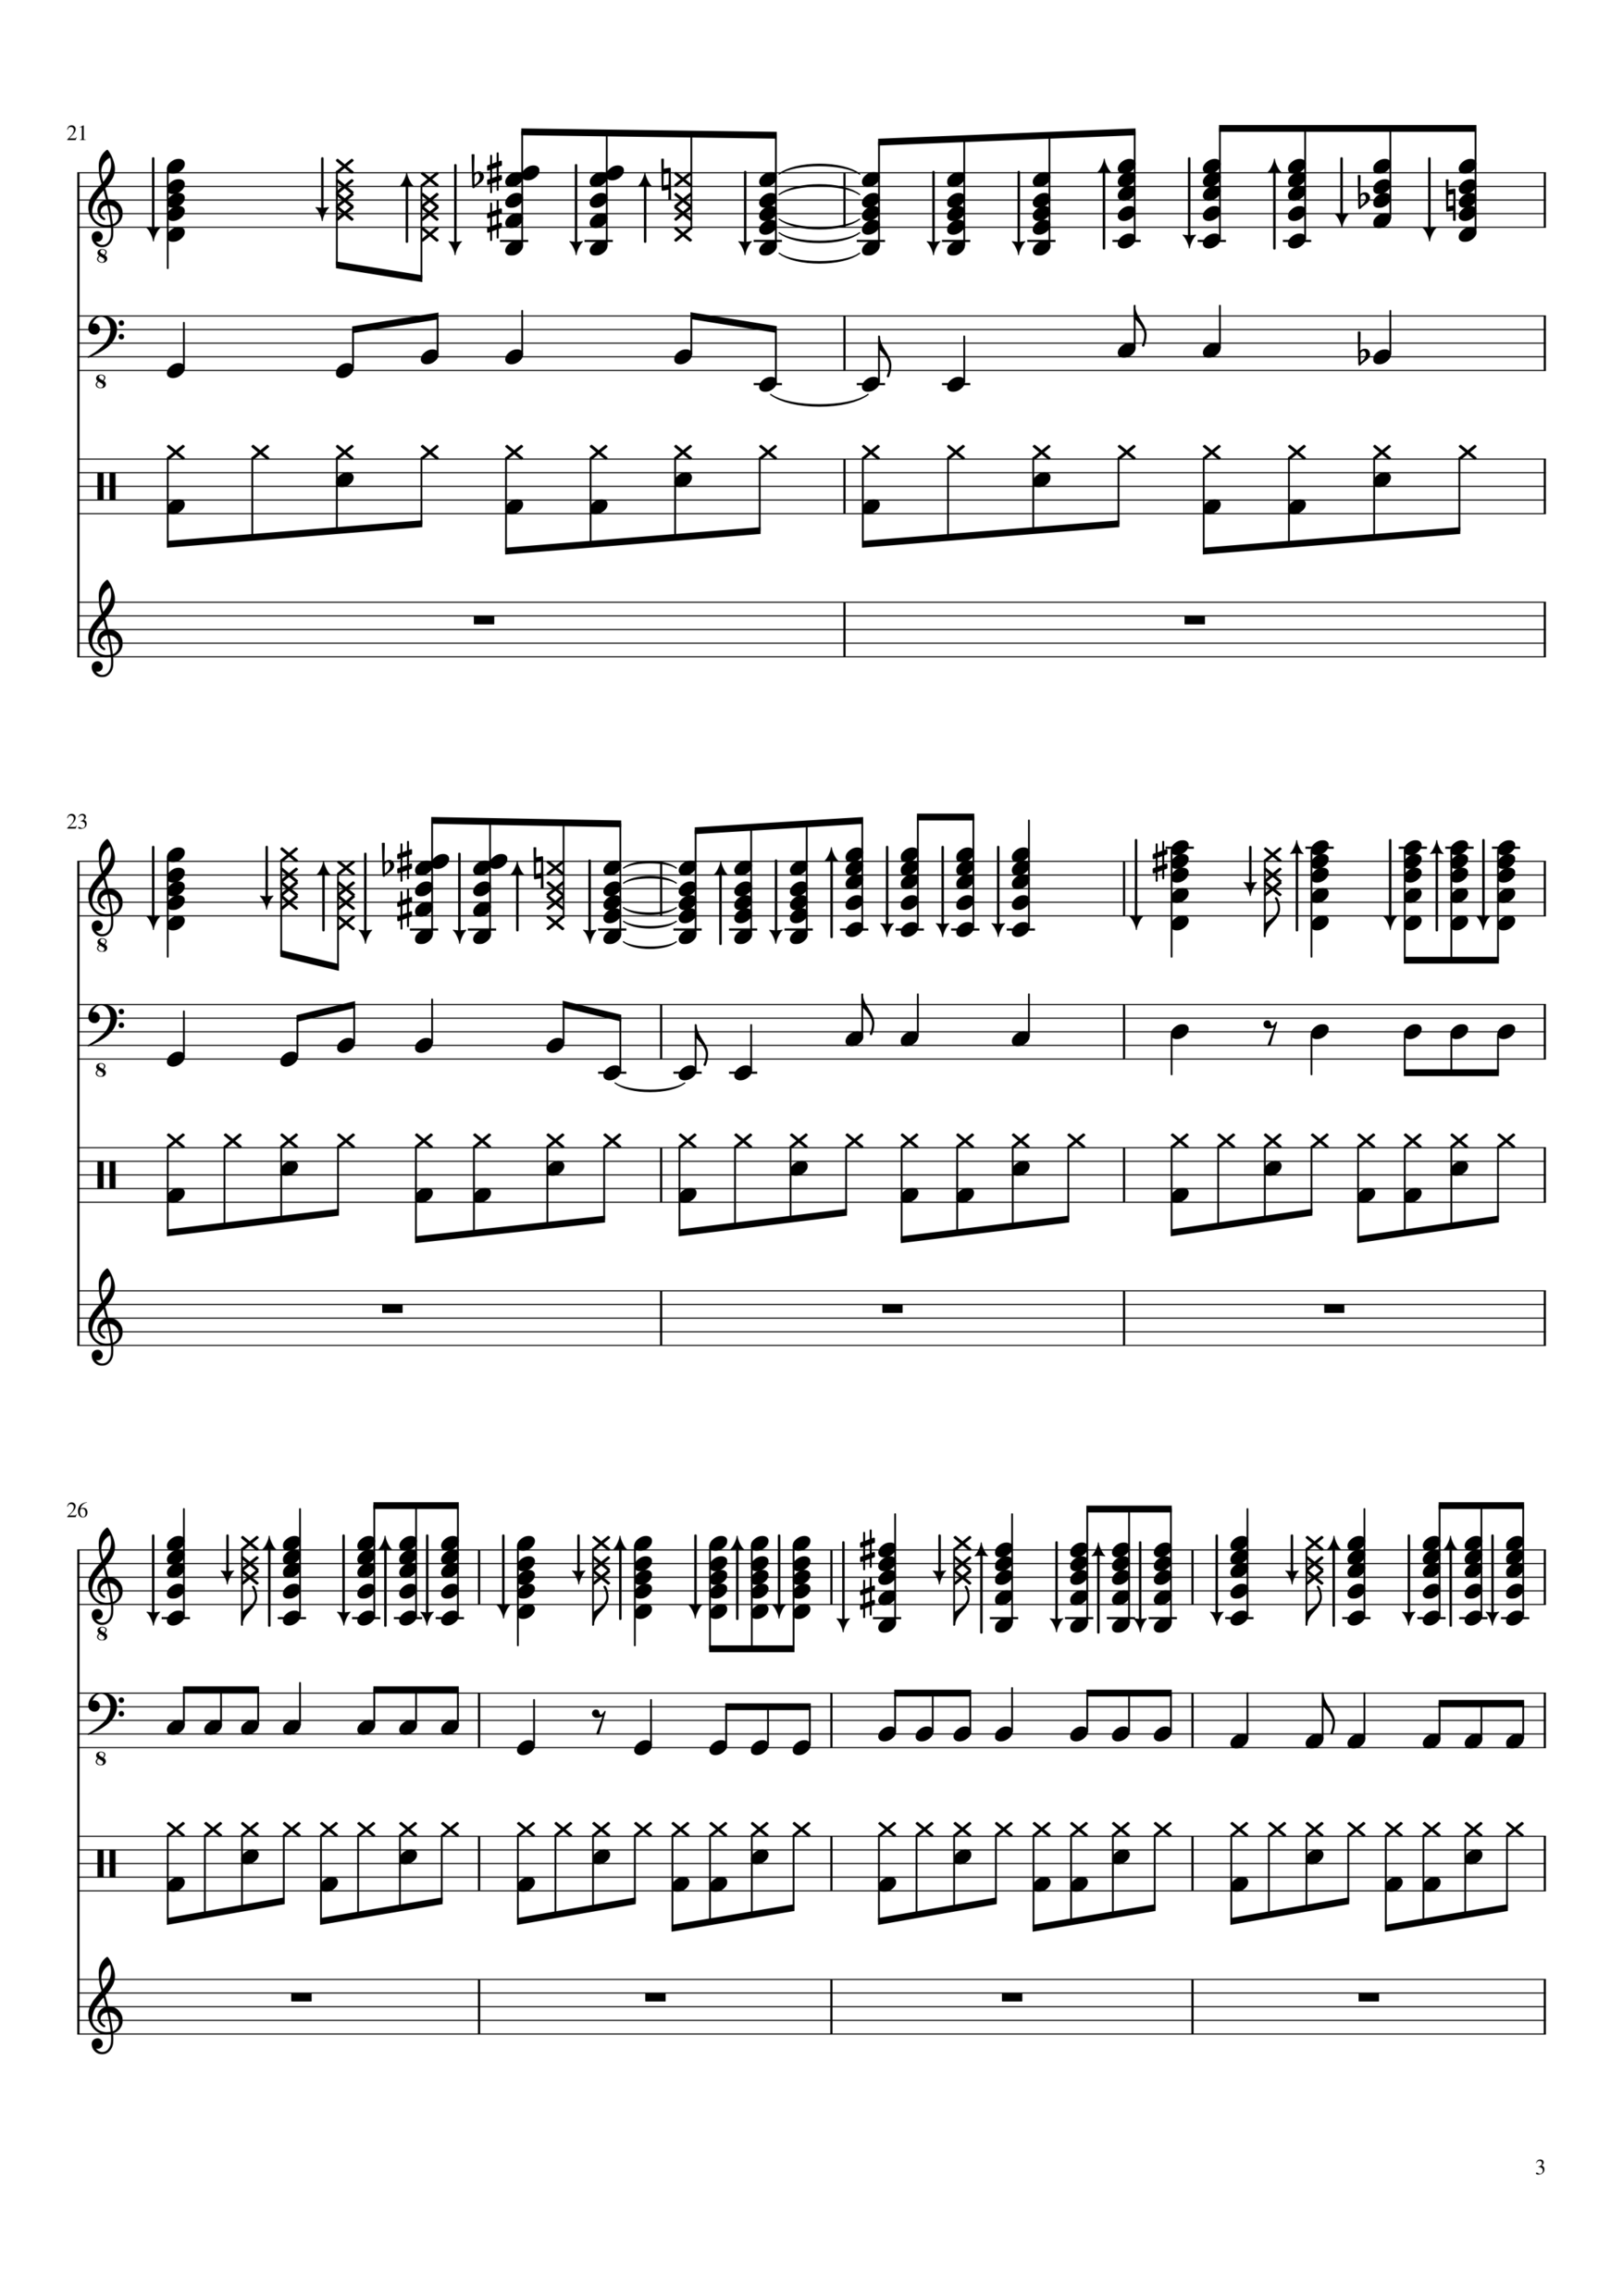 Skvoz dyiru v moey golove slide, Image 3